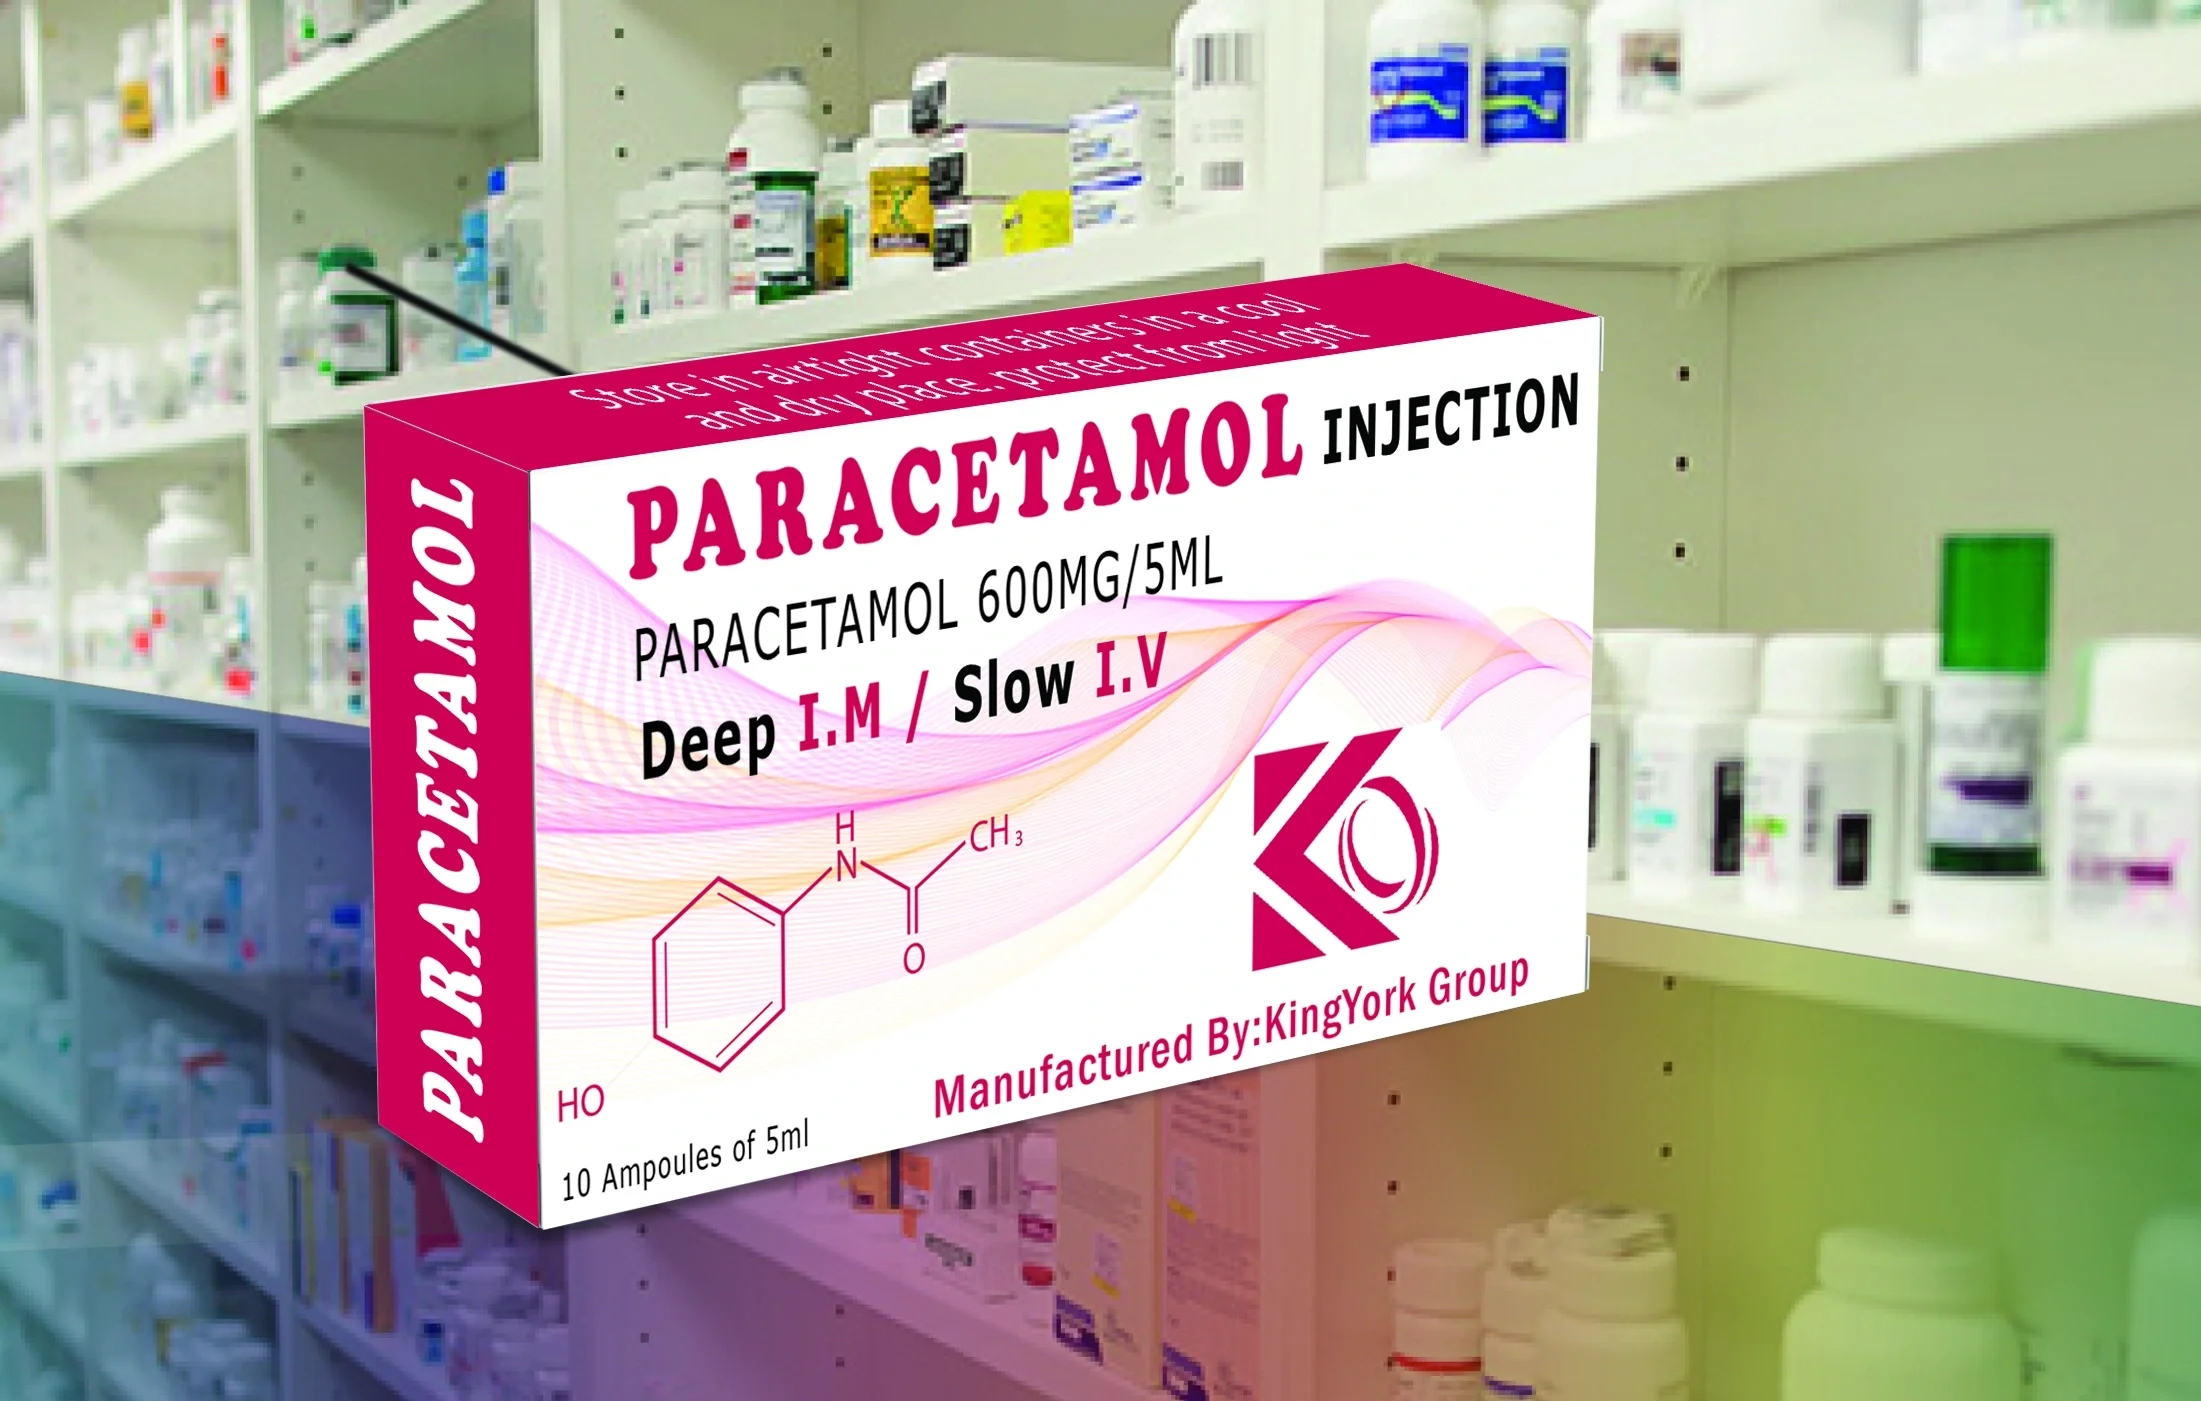 'paracetamol injections', 'analgesic ampoules', 'paracetamol 600mg injection', 'paracetamol'